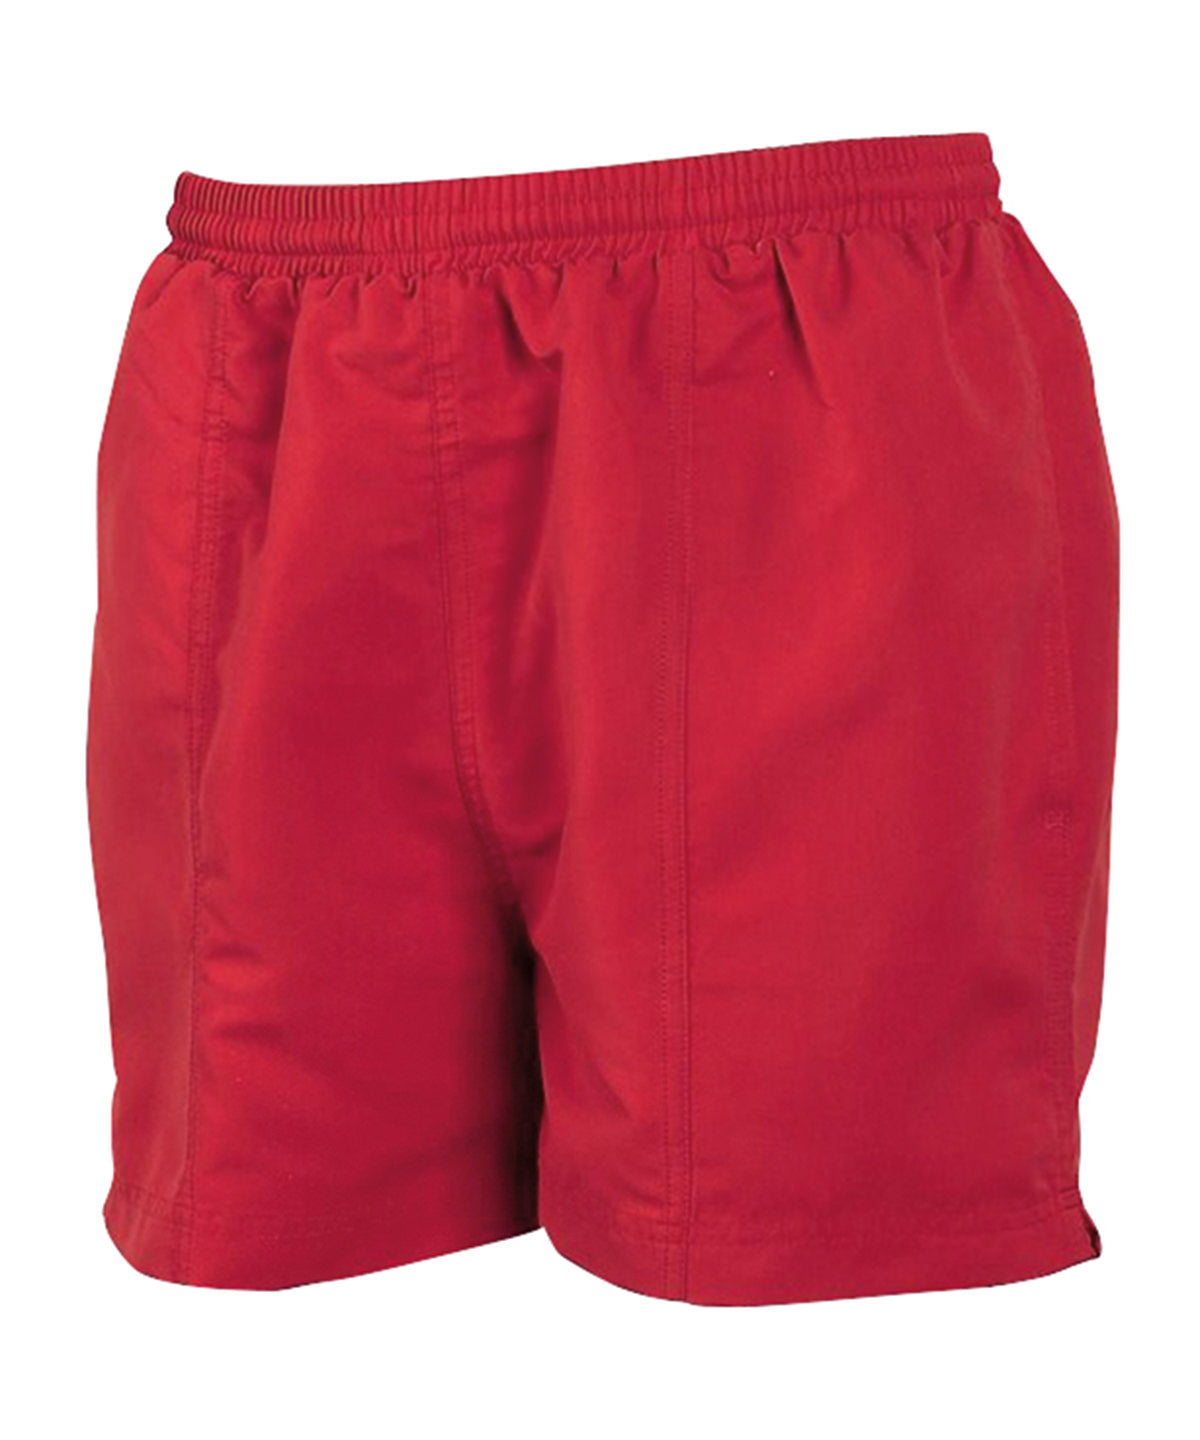 Stuttbuxur - Kid's All Purpose Lined Shorts